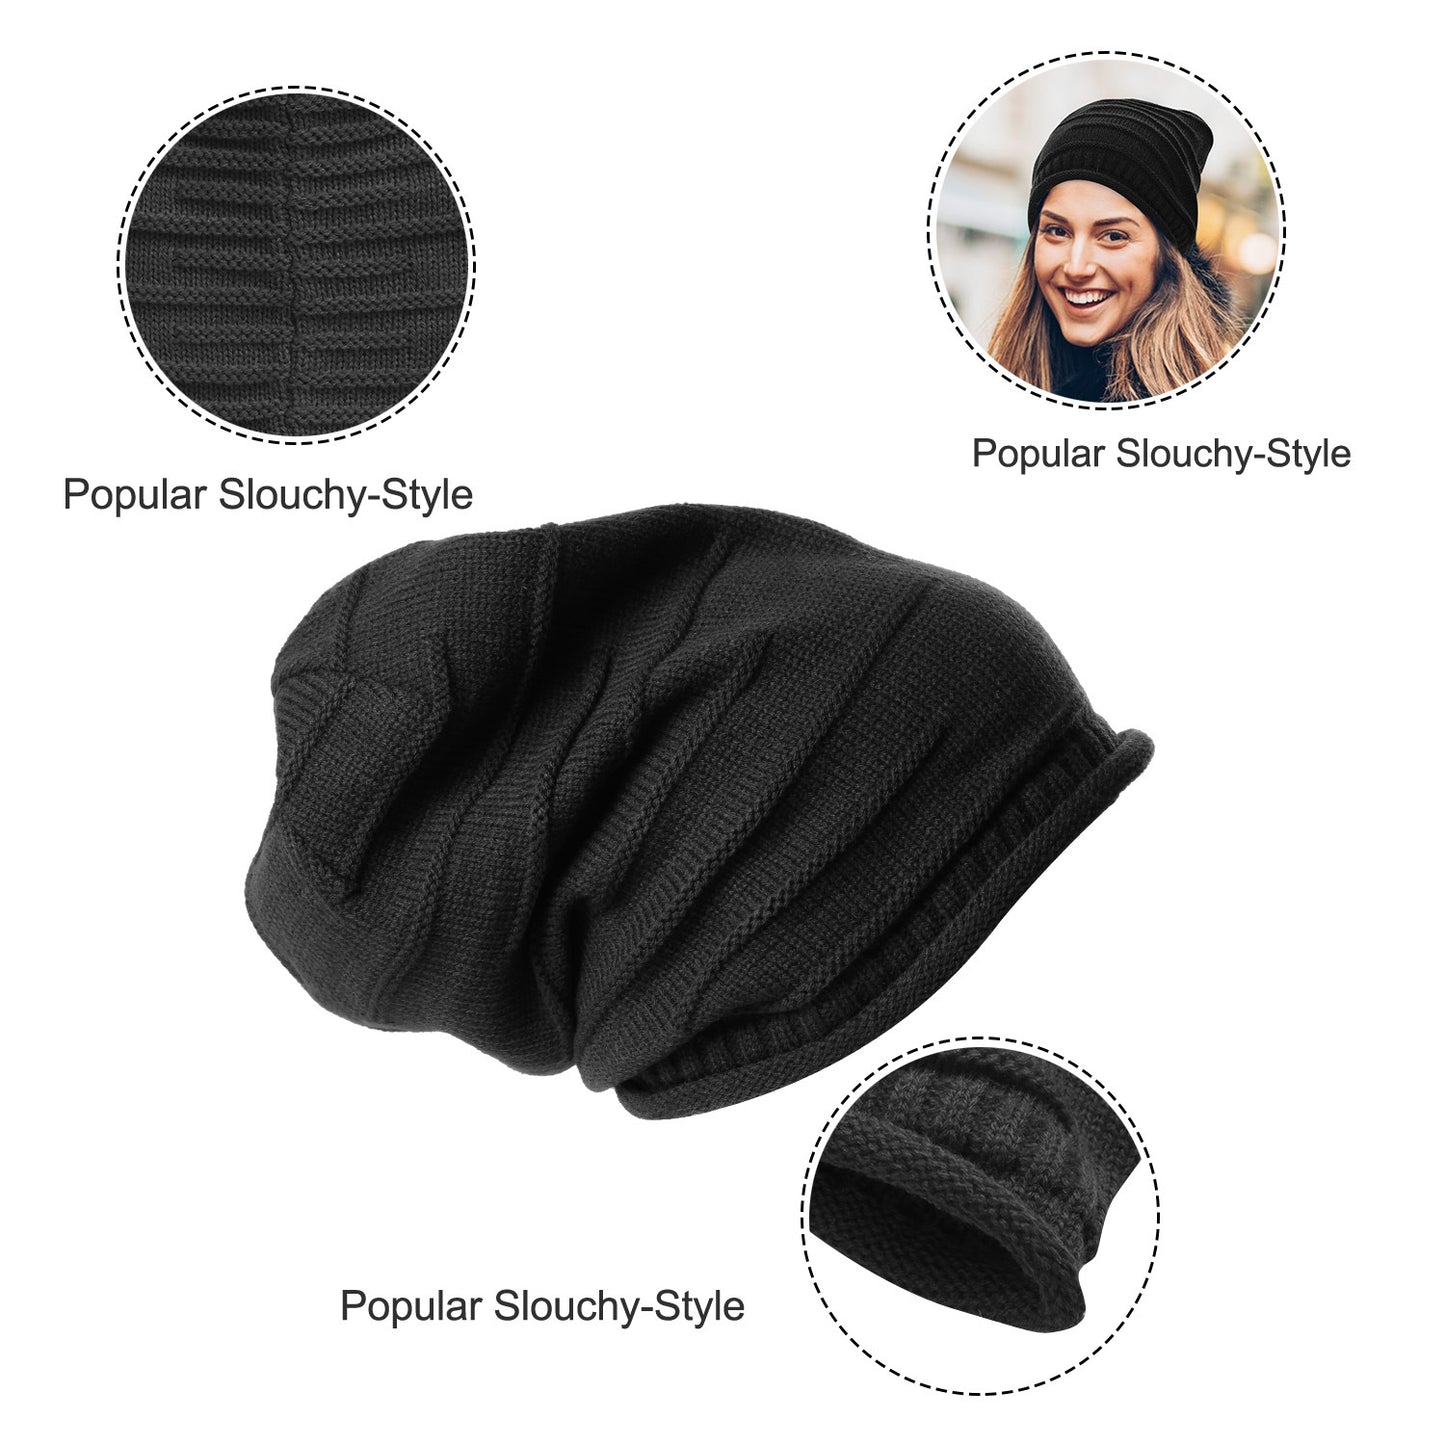 Unisex Knit Beanie Hat Winter Warm Hat Slouchy Baggy Hats Skull Cap 5 Colors